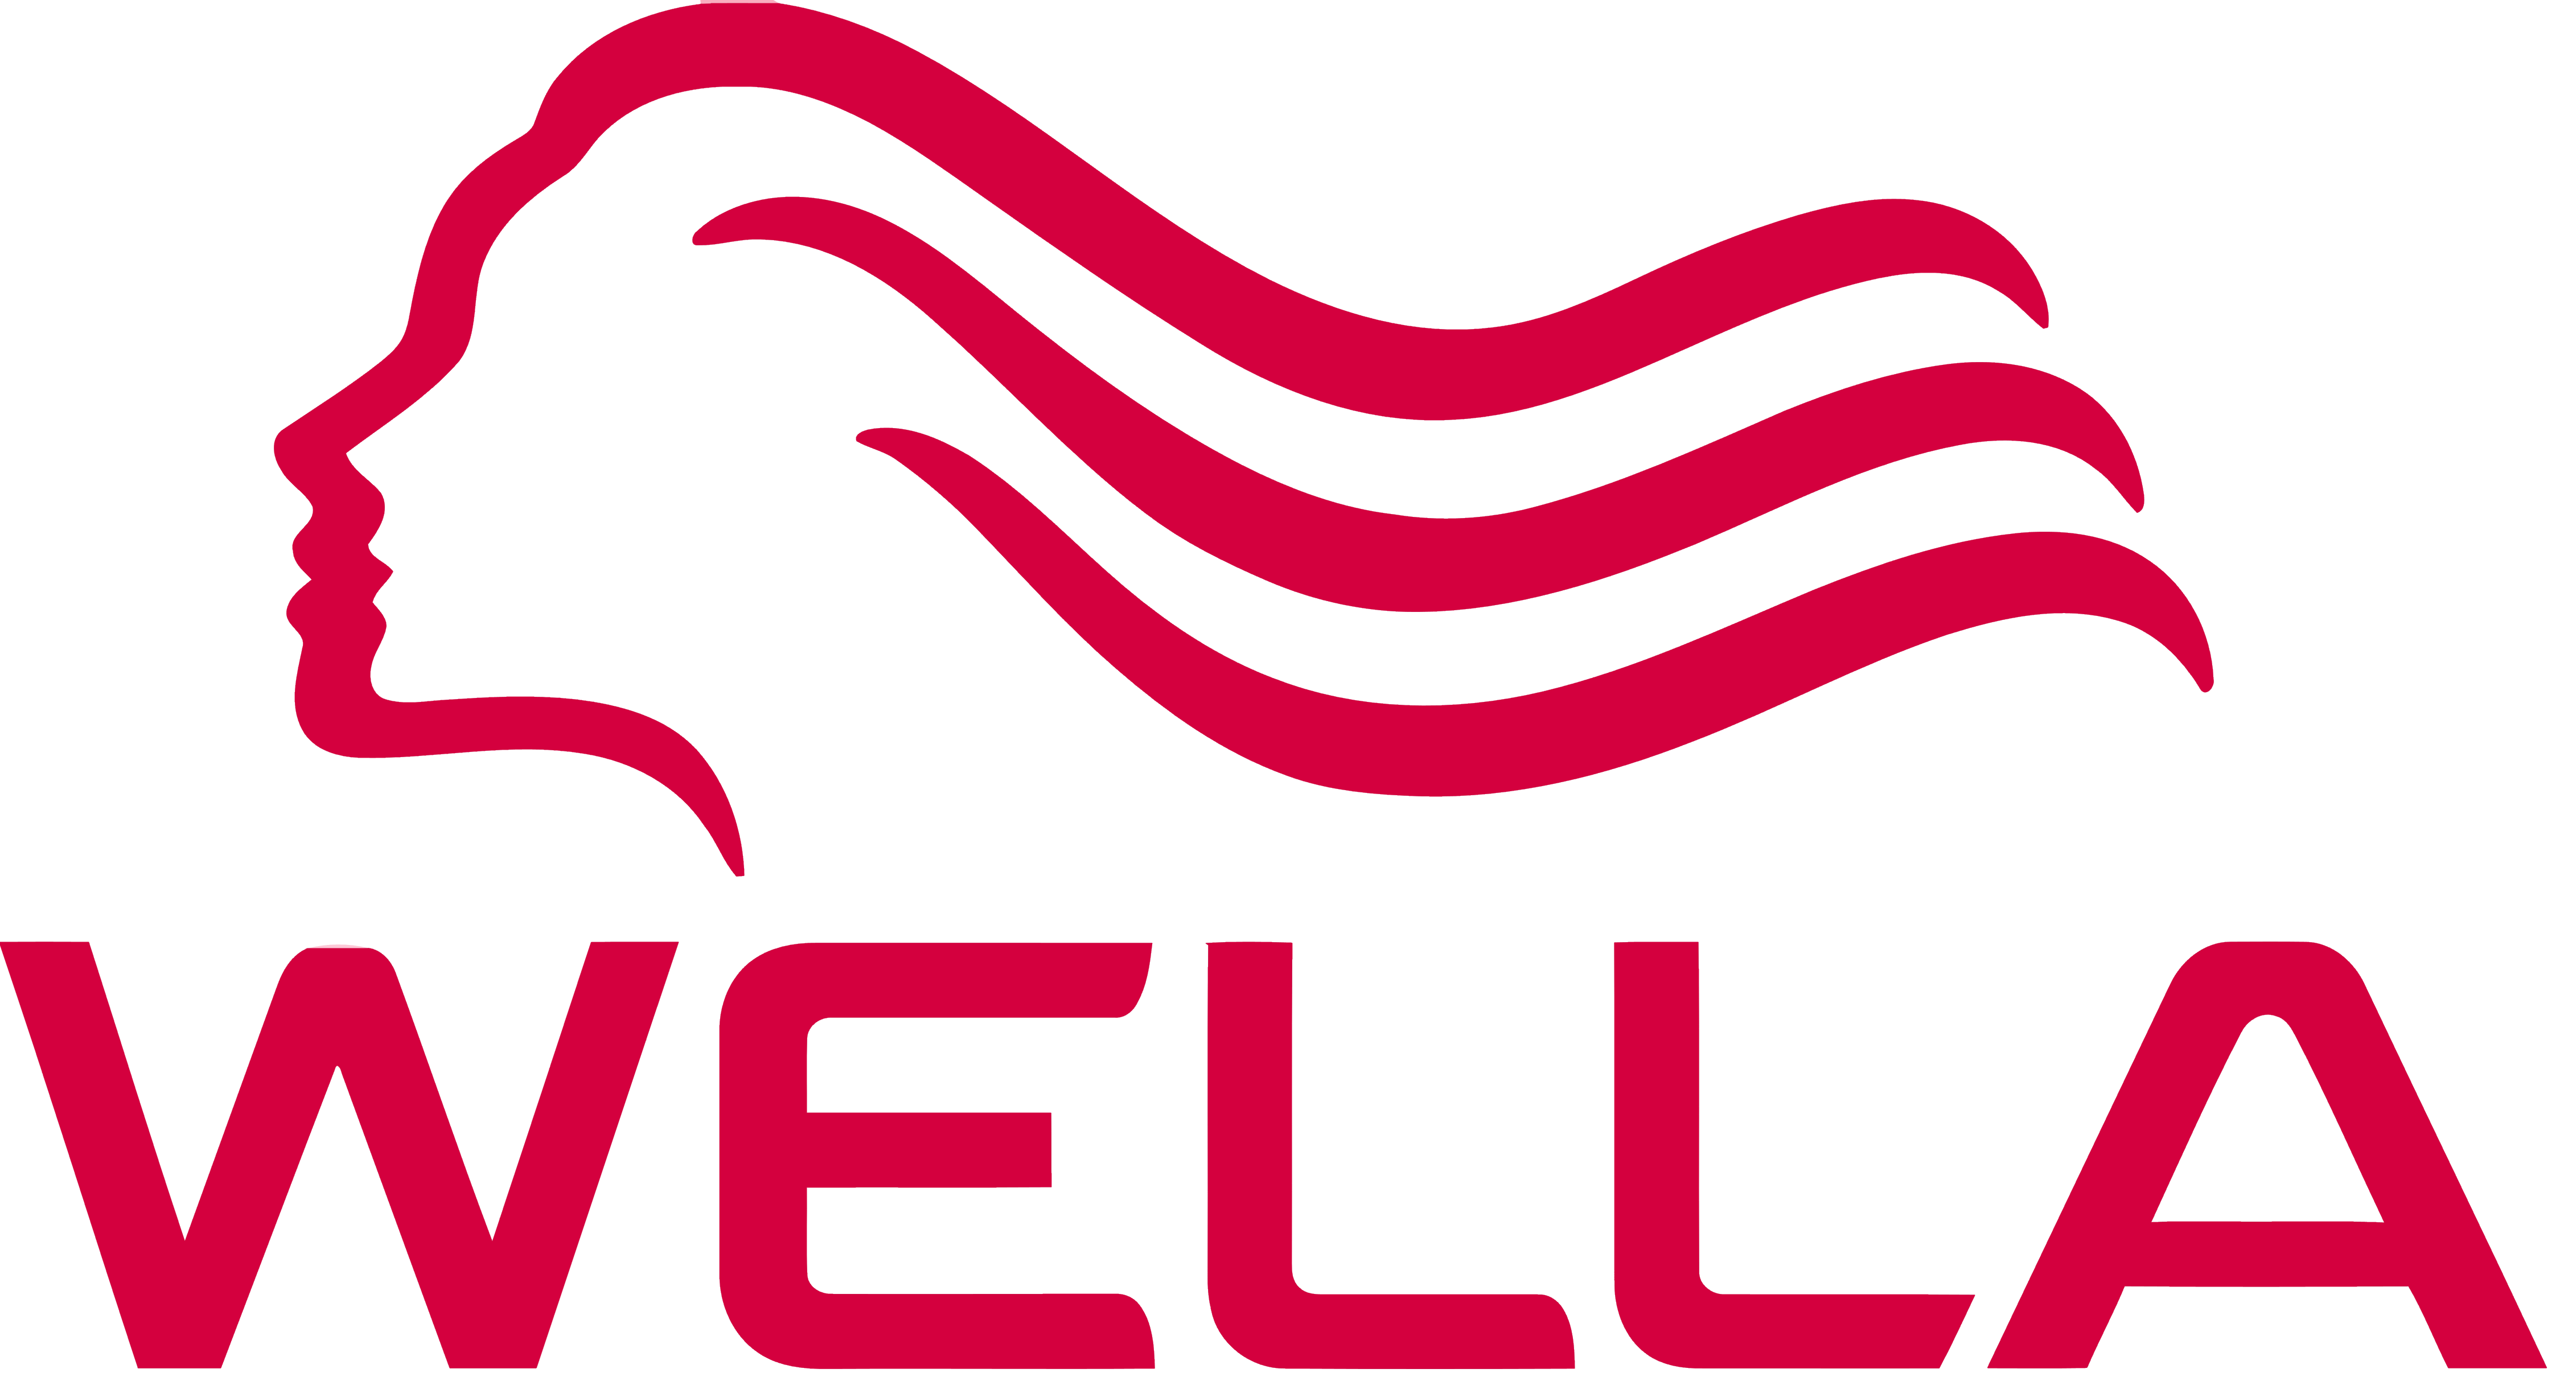 Wella logo, logotype